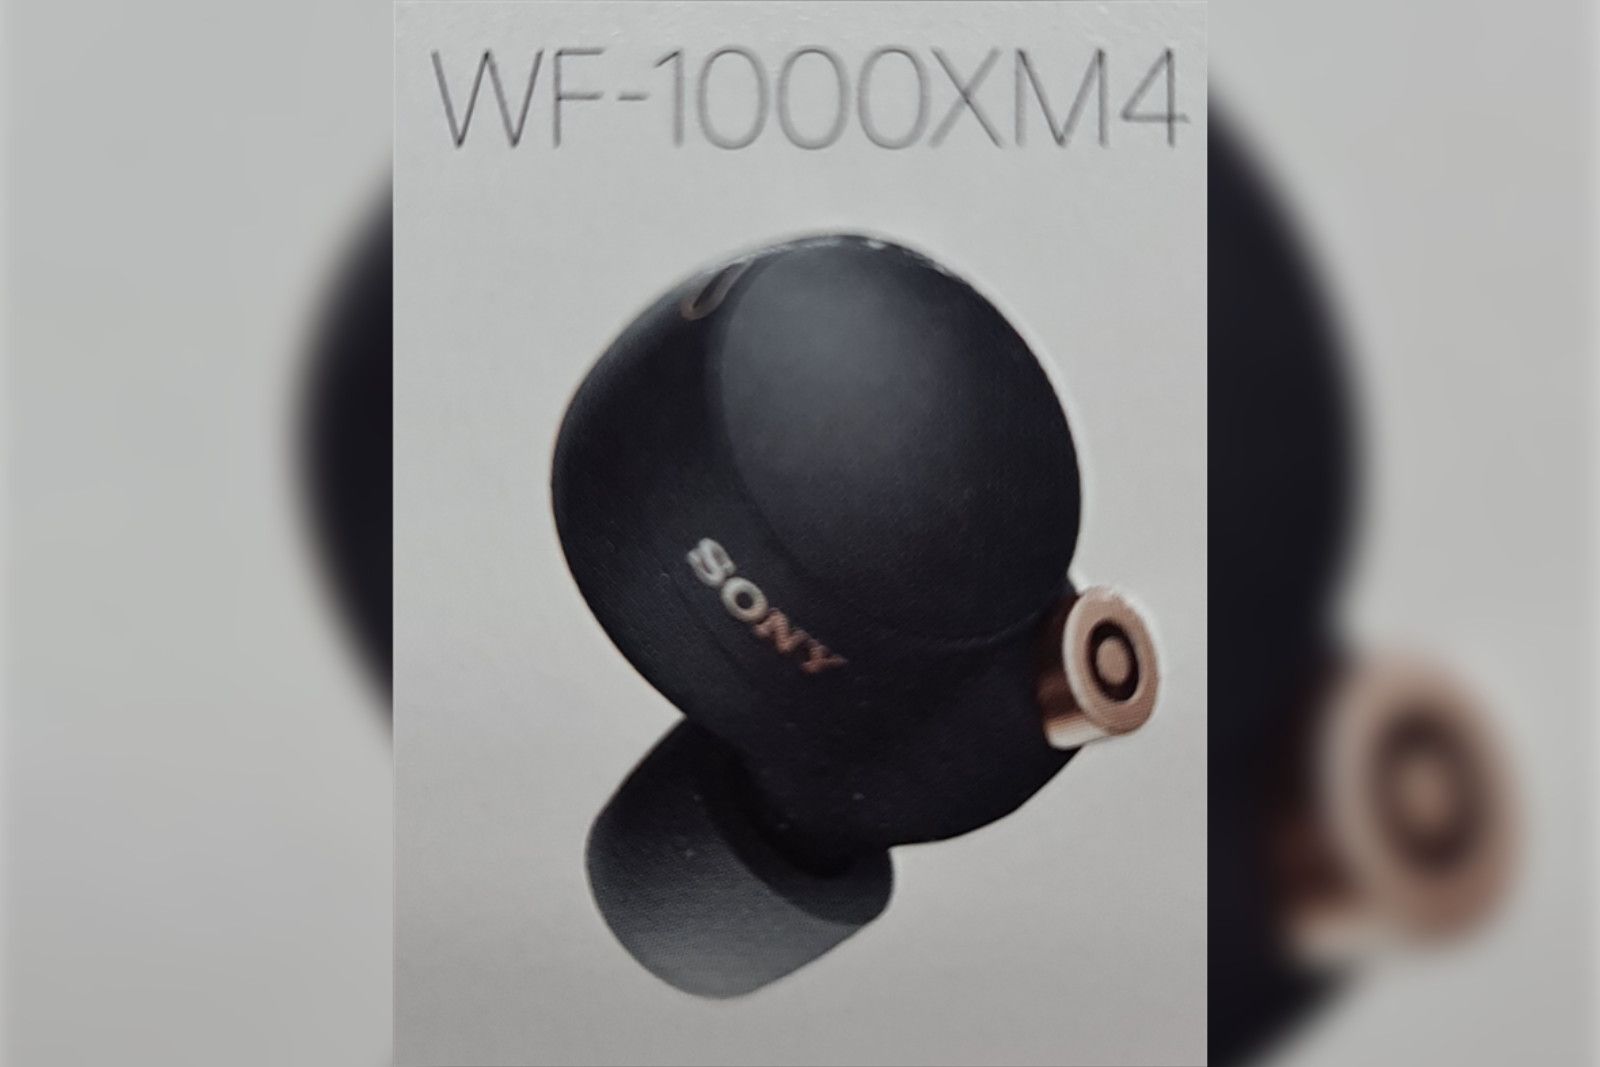 Sony WF-1000XM4 leak reveals major design change photo 1